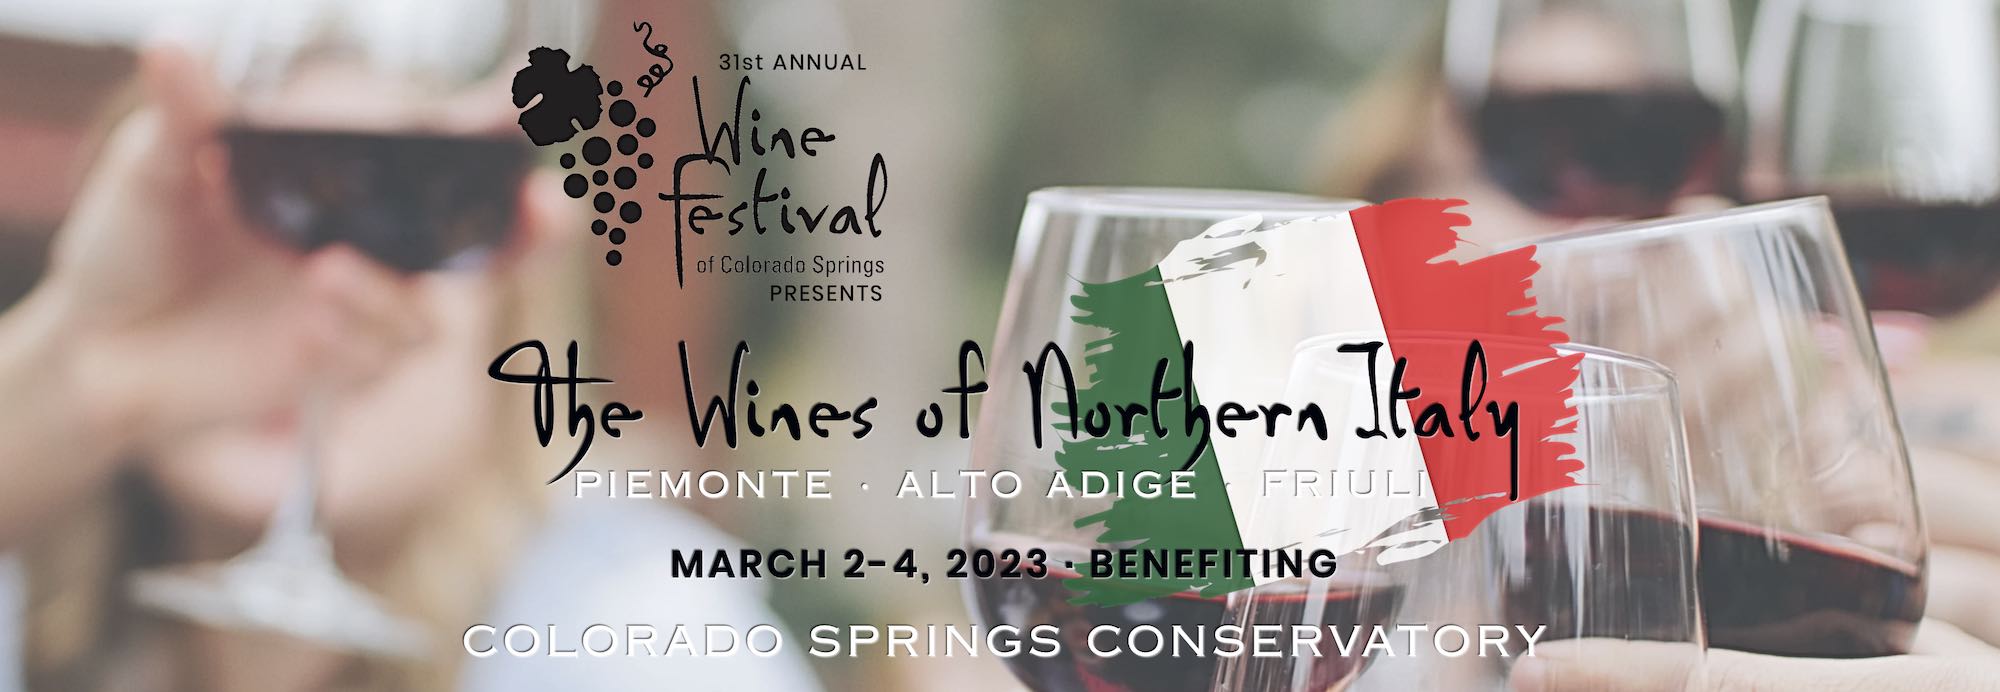 2023 wine festival of Colorado Springs